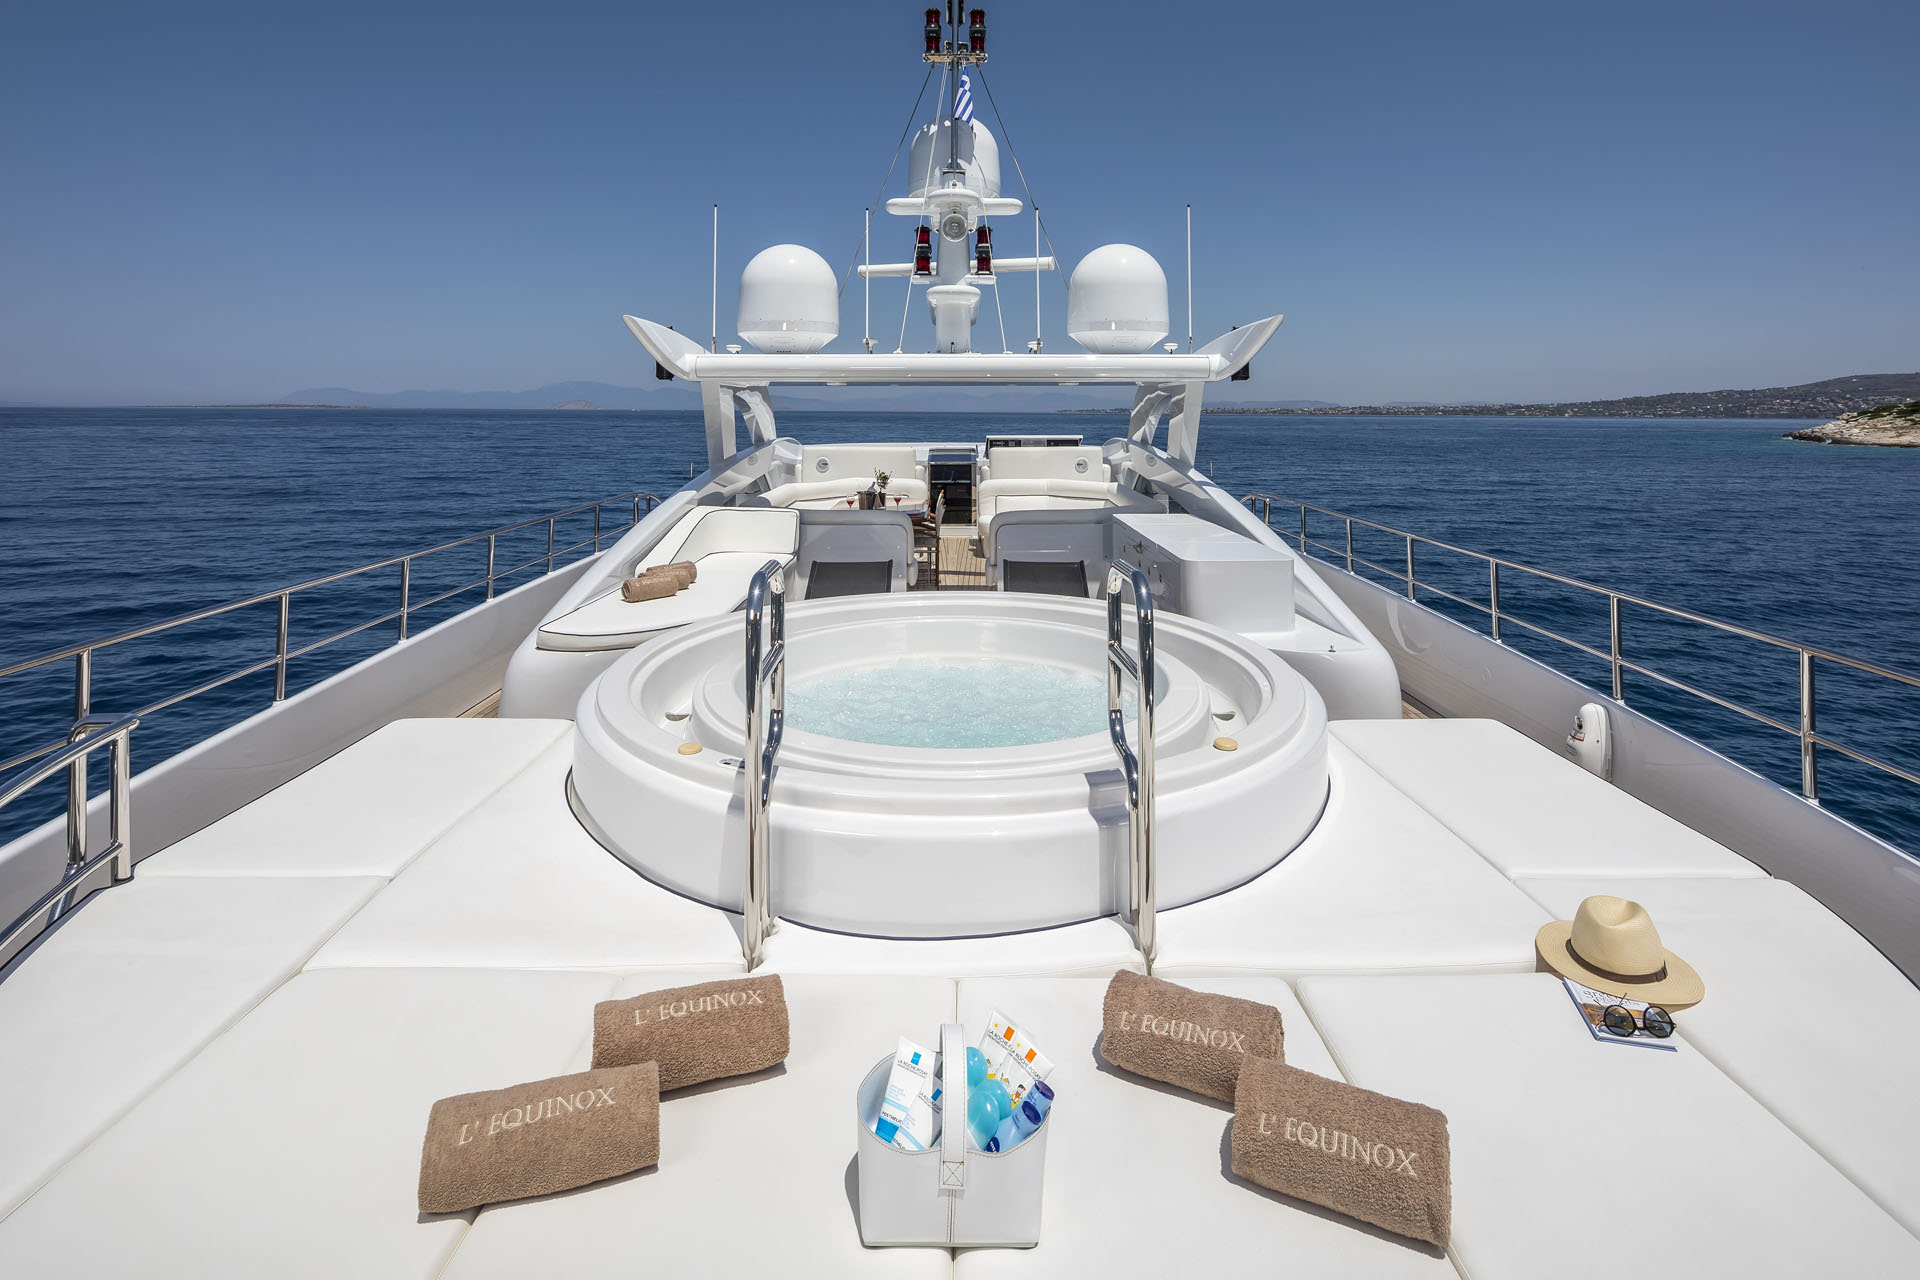 Motor Yacht Lequinox Sundeck Jacuzzi — Yacht Charter And Superyacht News